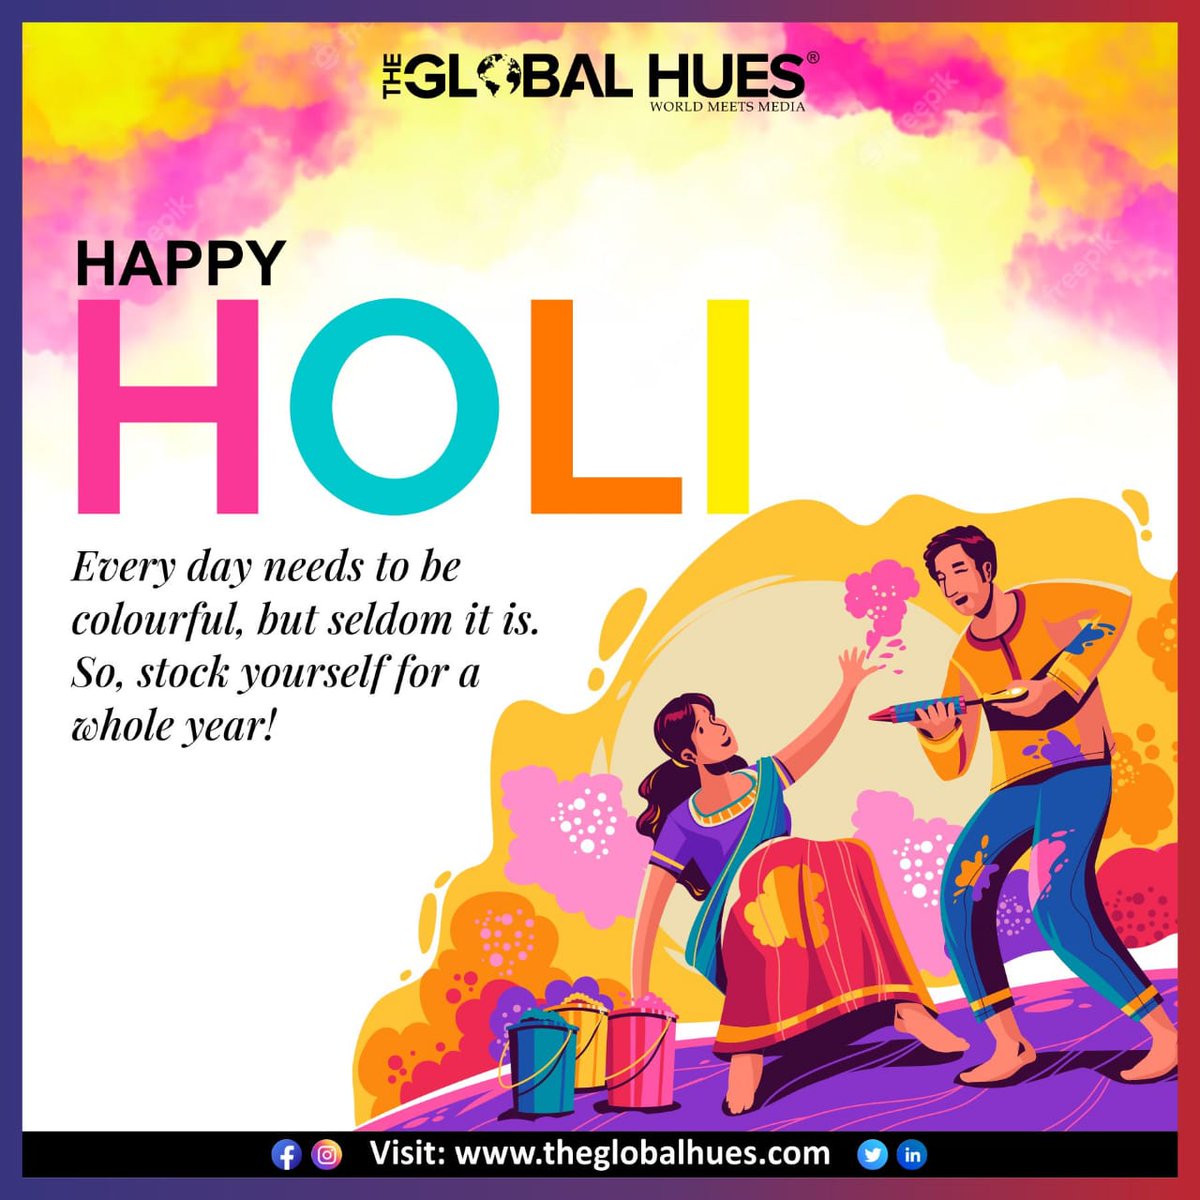 Happy Holi Everyone from TGH Family 🎈🎉
.
.
.
#holifestival #happyholi #holihai #happyholi #festivalofcolors #colors #holi #festivals #festivalsofindia #celebrationindia #celebration #balloons #colors_of_day #theglobalhues